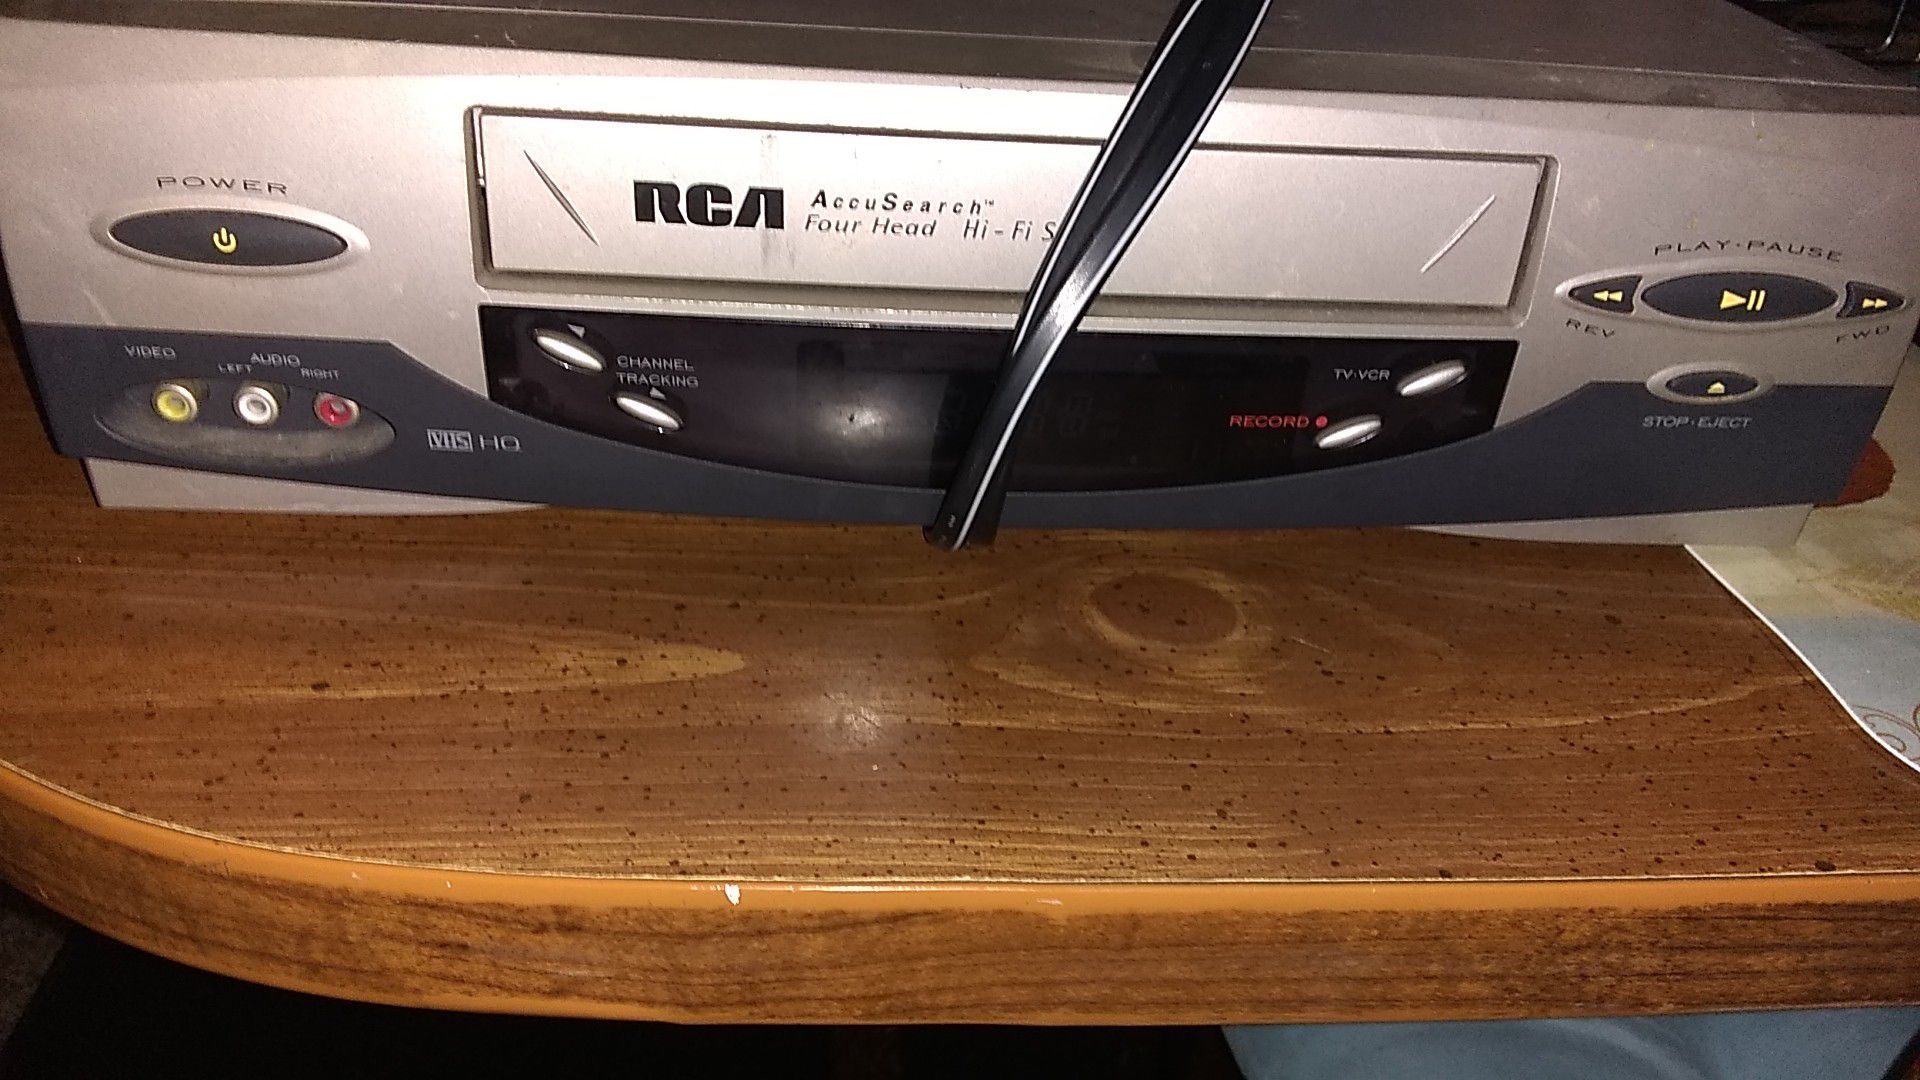 Rca VHS player